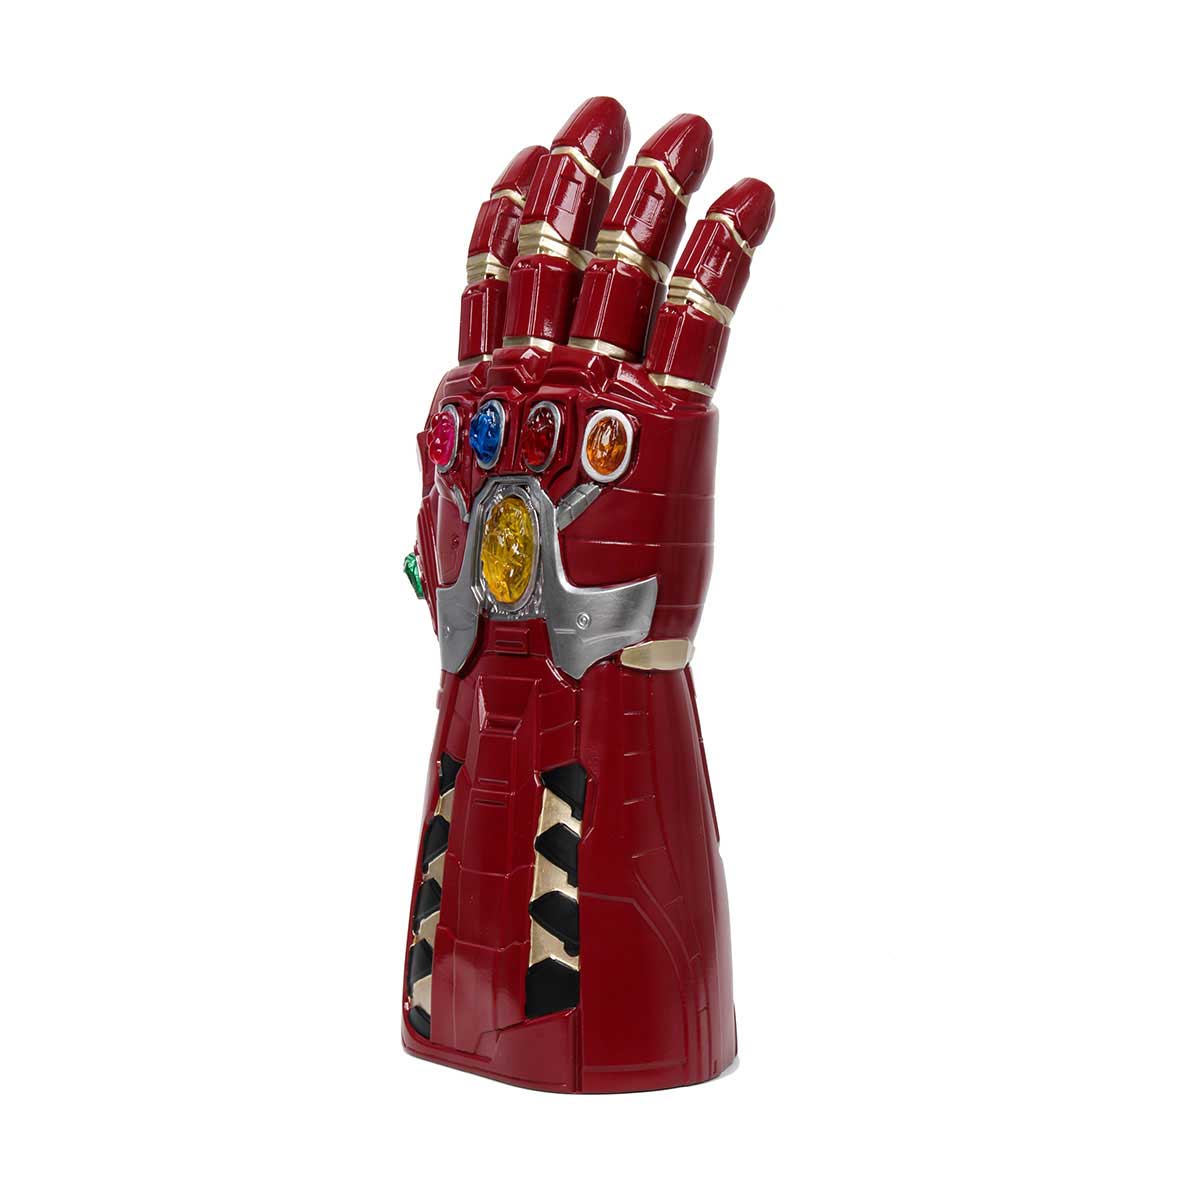 Avengers 4 EndGame Iron Man Tony Stark LED Guantes